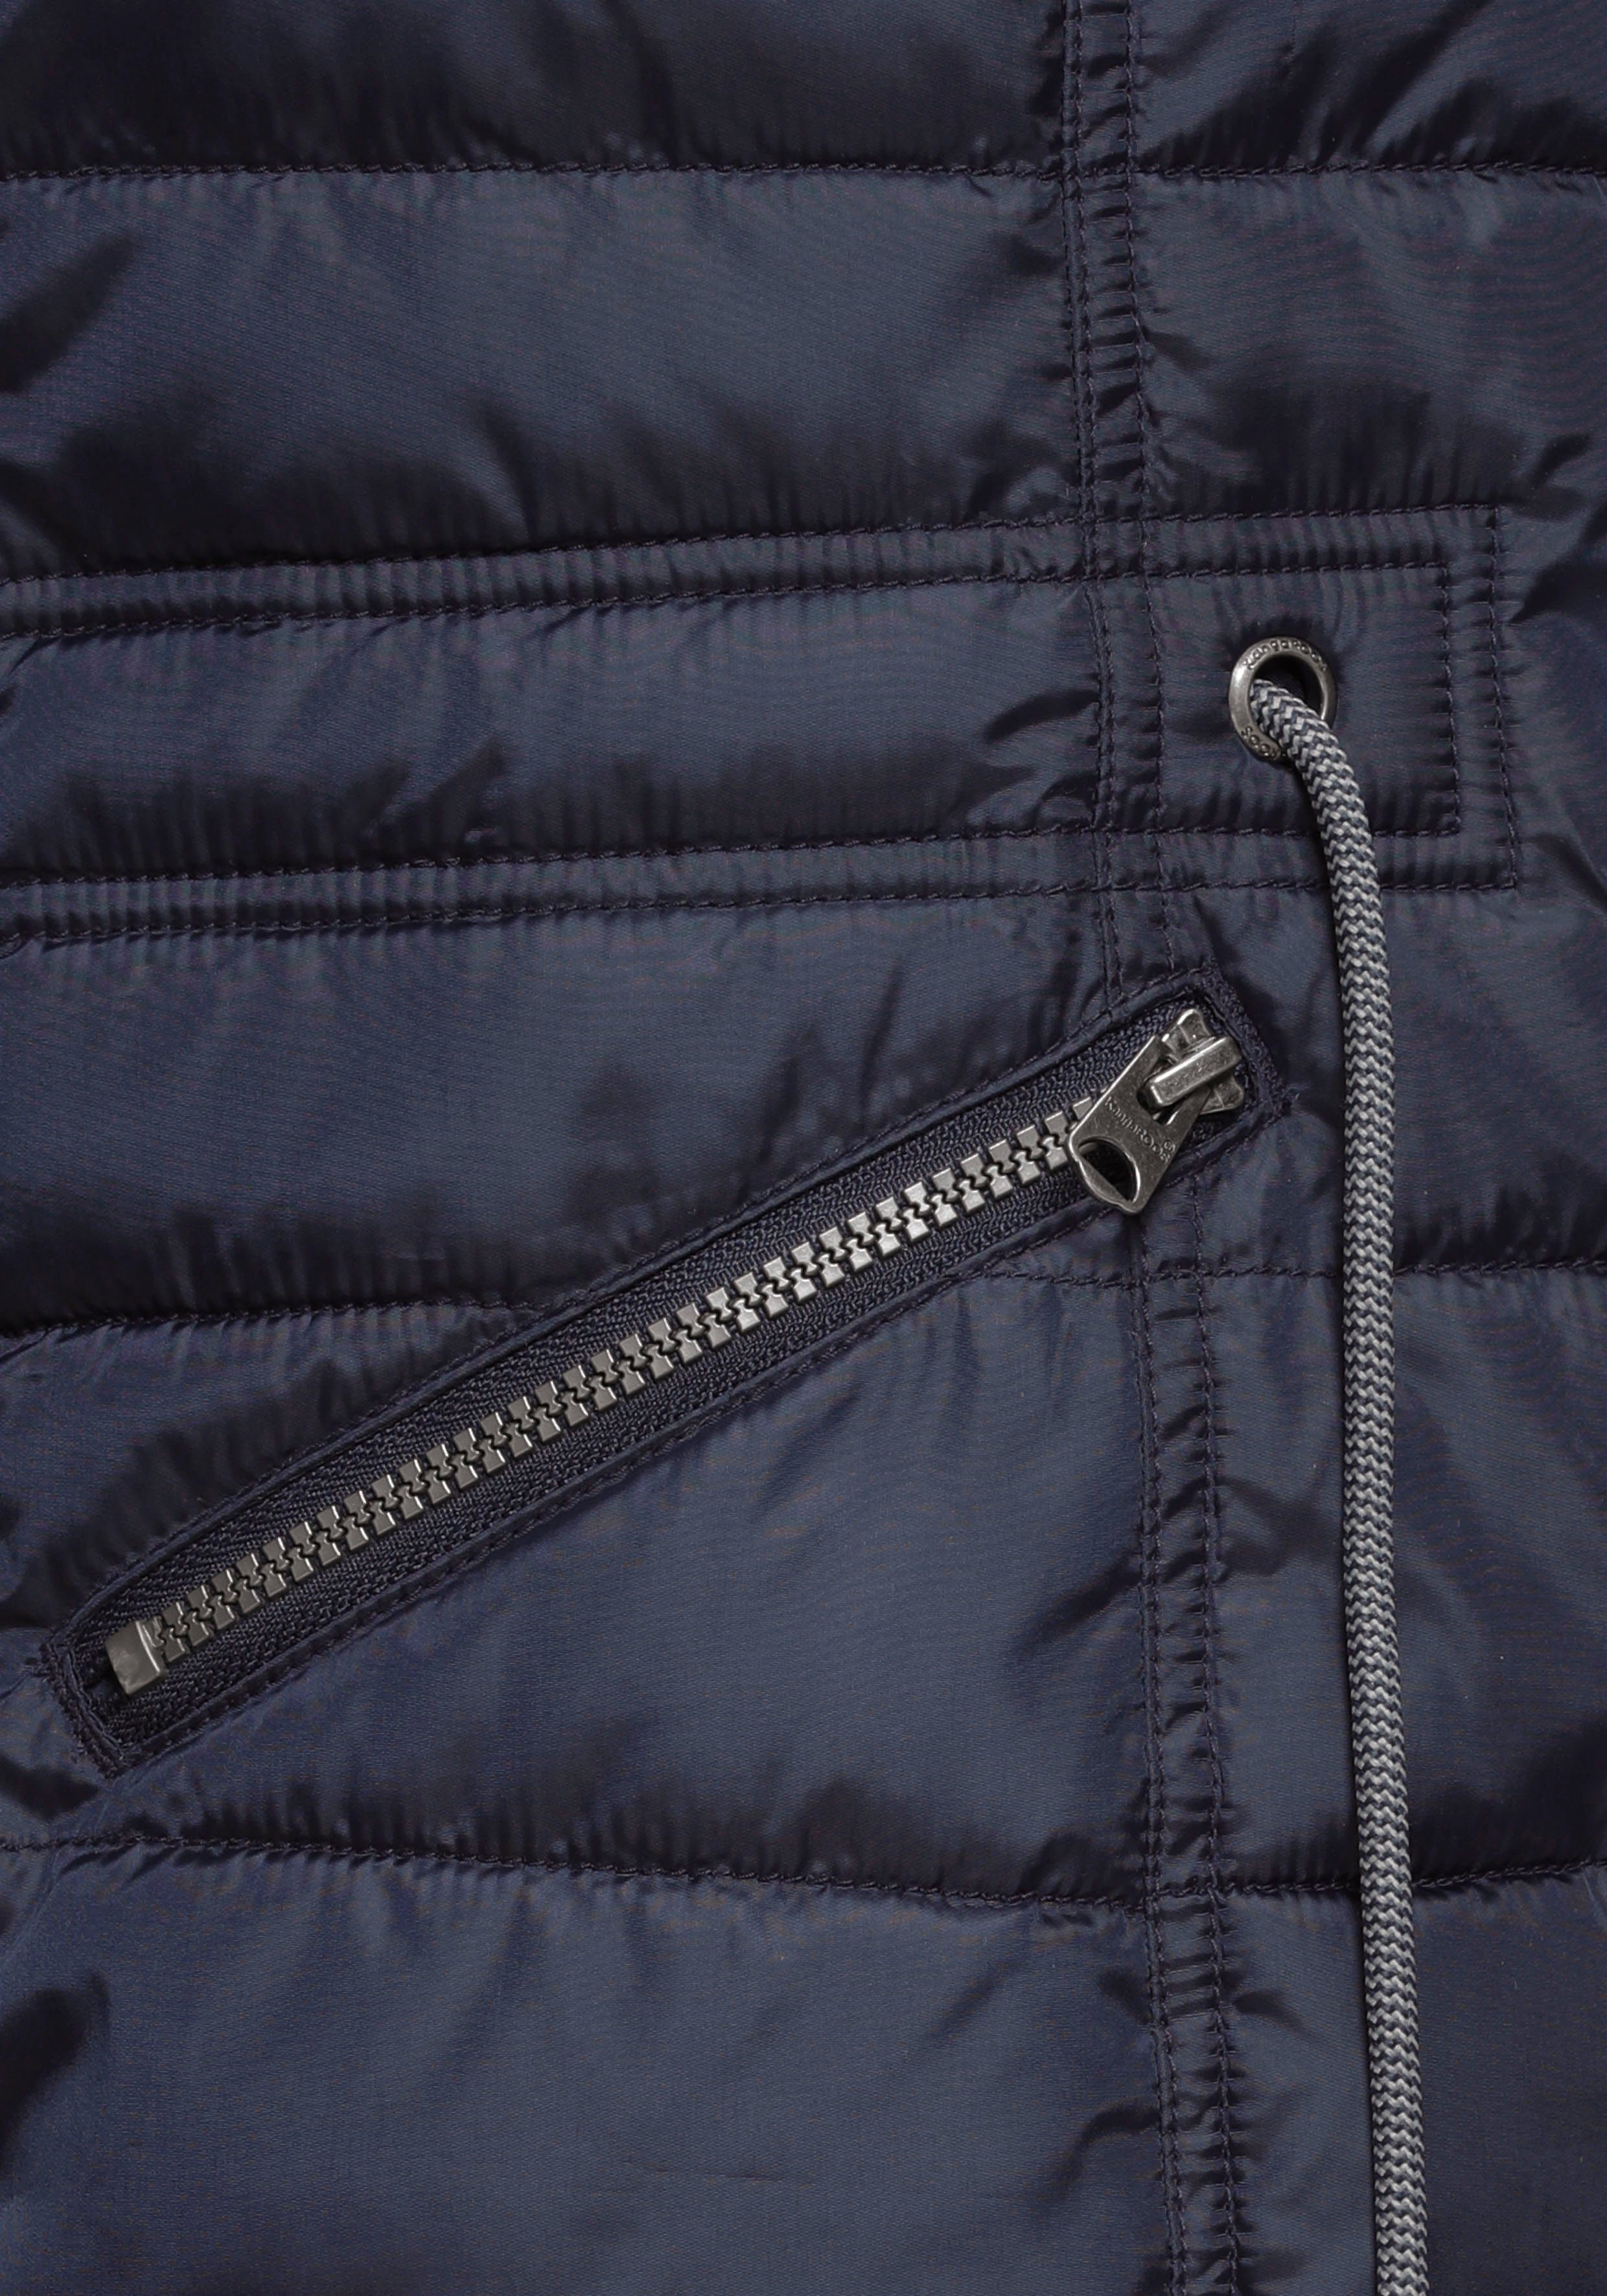 KangaROOS Steppjacke mit kuscheligem, abnehmbarem Material) an (Jacke aus der Kapuze Fellimitat-Kragen blau nachhaltigem